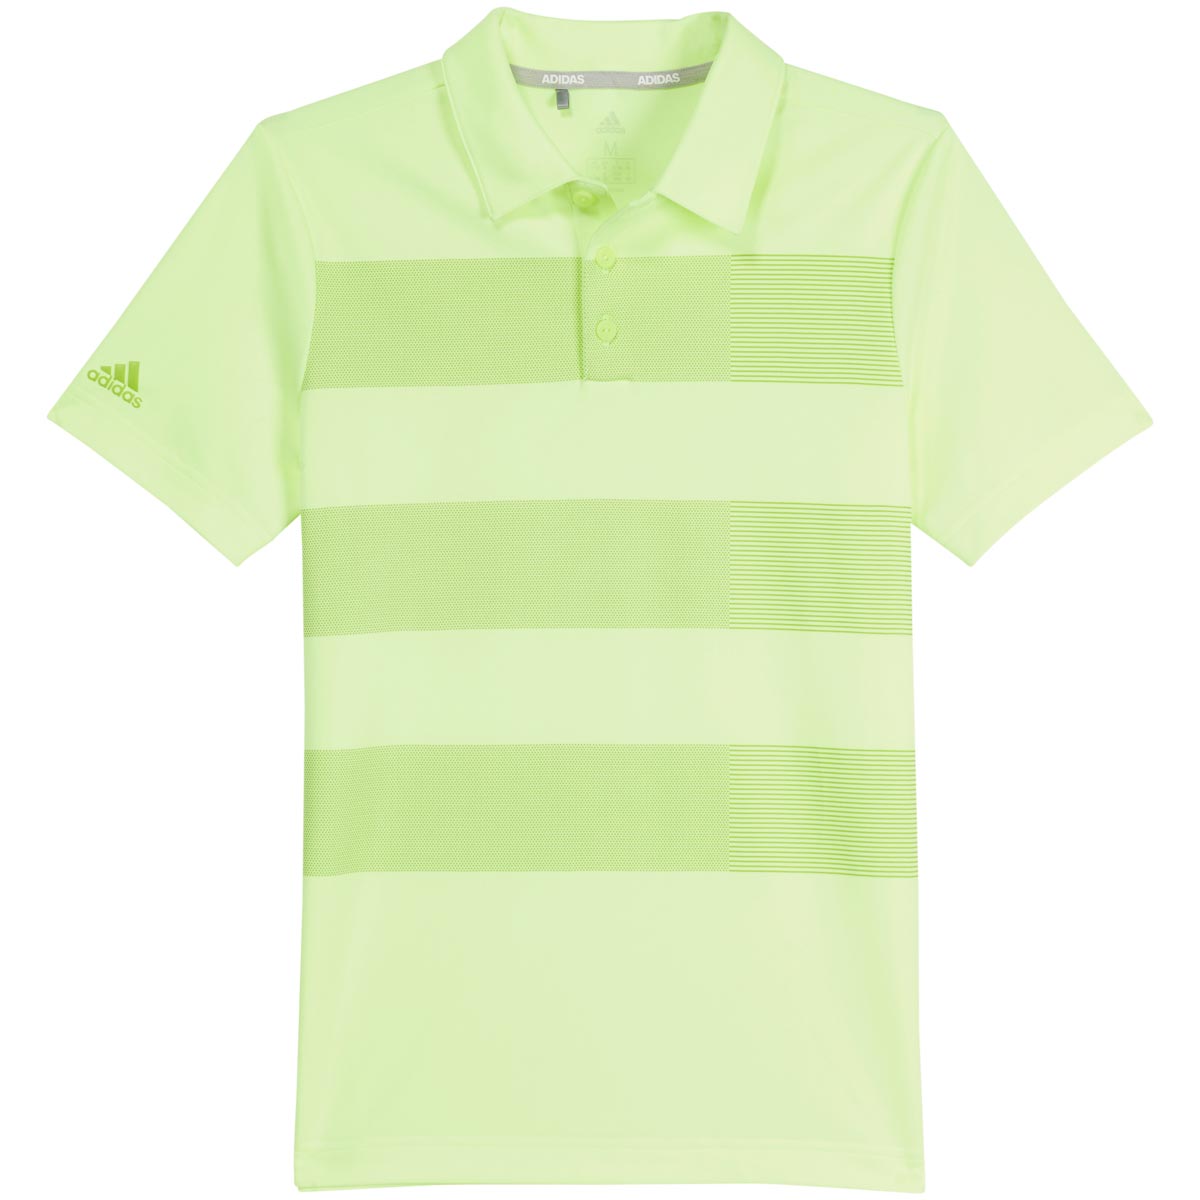 Adidas 3-Stripes Print Junior Golf Shirts